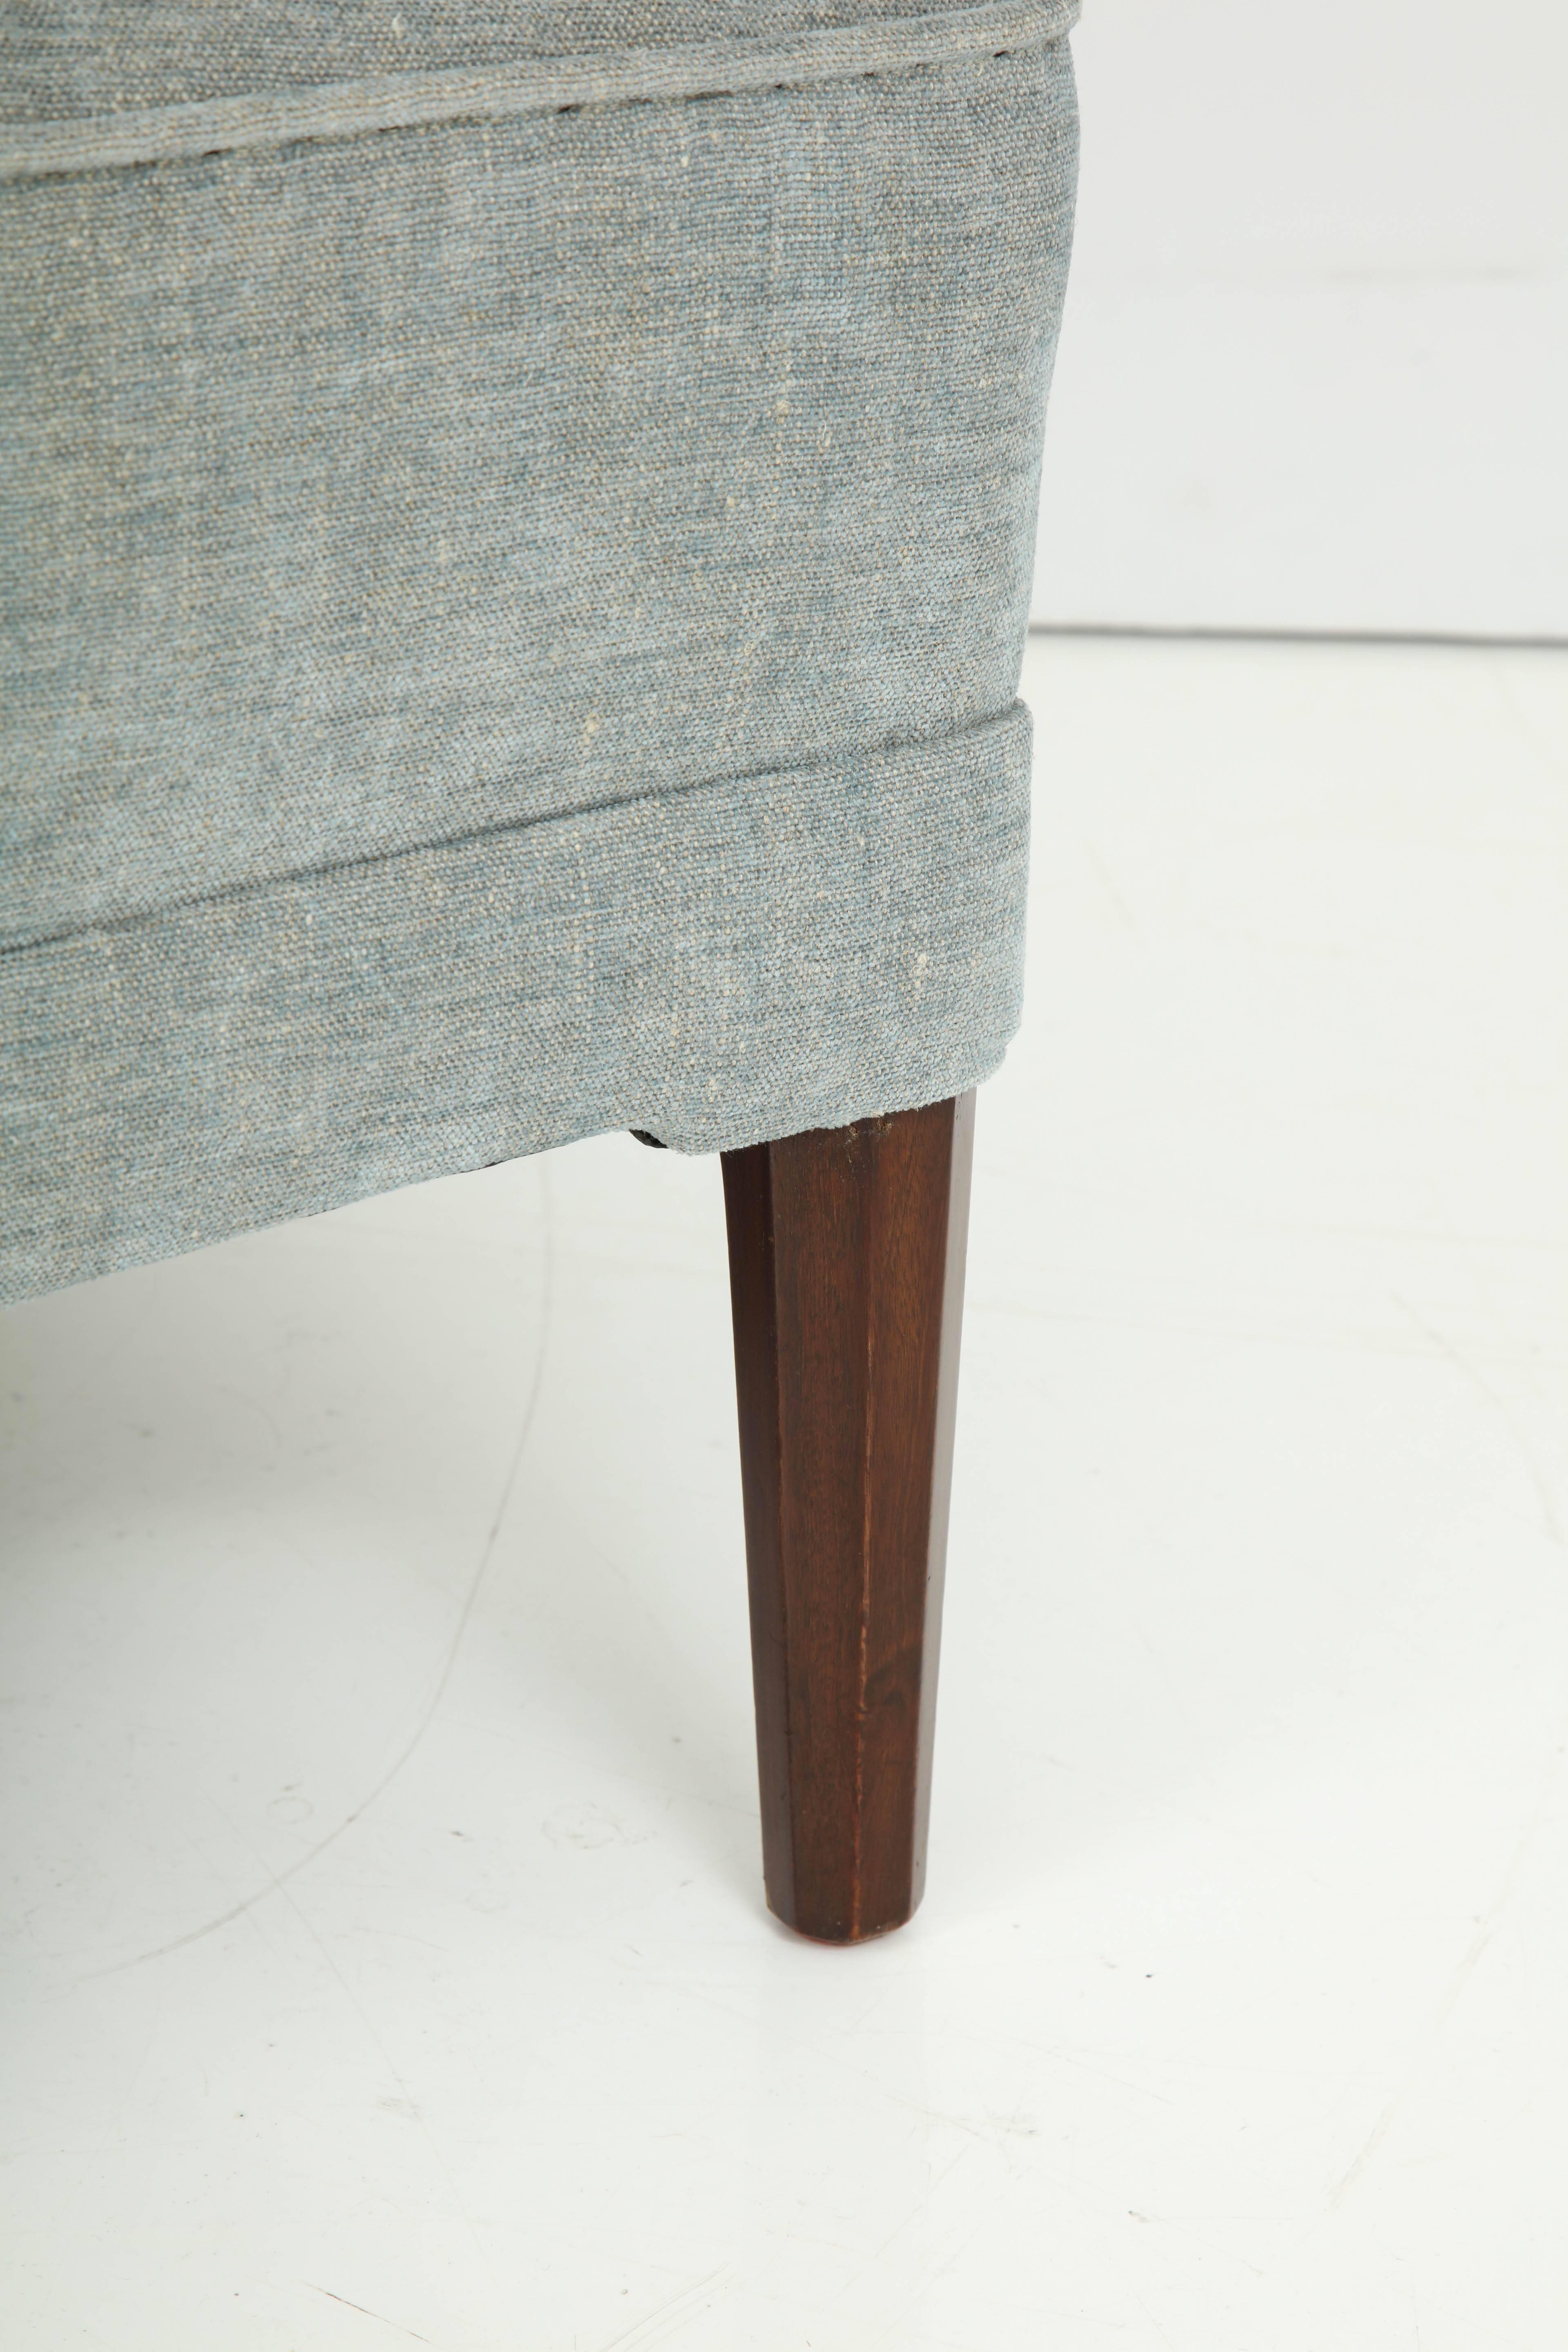 Scandinavian Modern Stylish Danish Wing Chair with Associated Footstool, circa 1940s